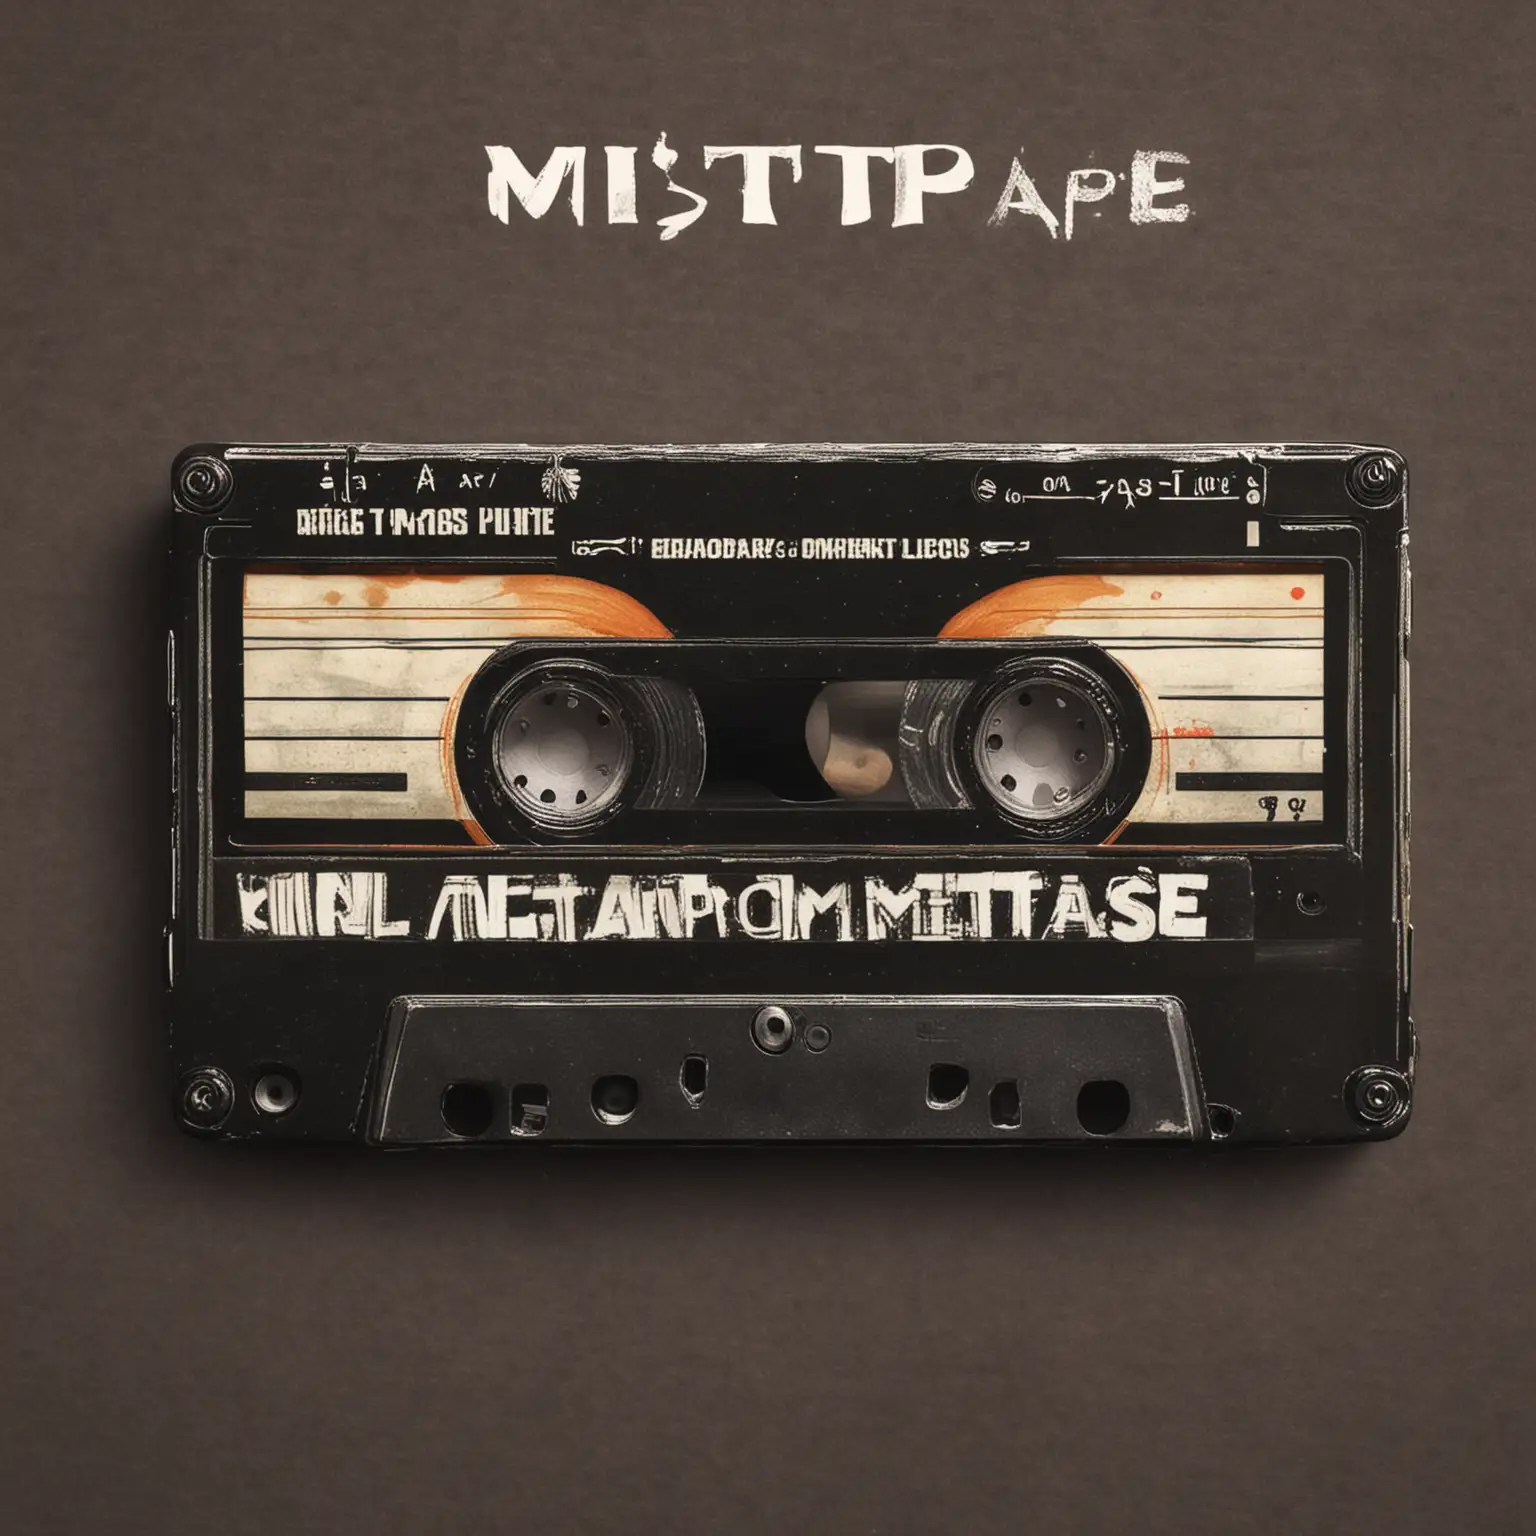 Vibrant Mixtape on Retro Cassette Player Music Nostalgia Concept